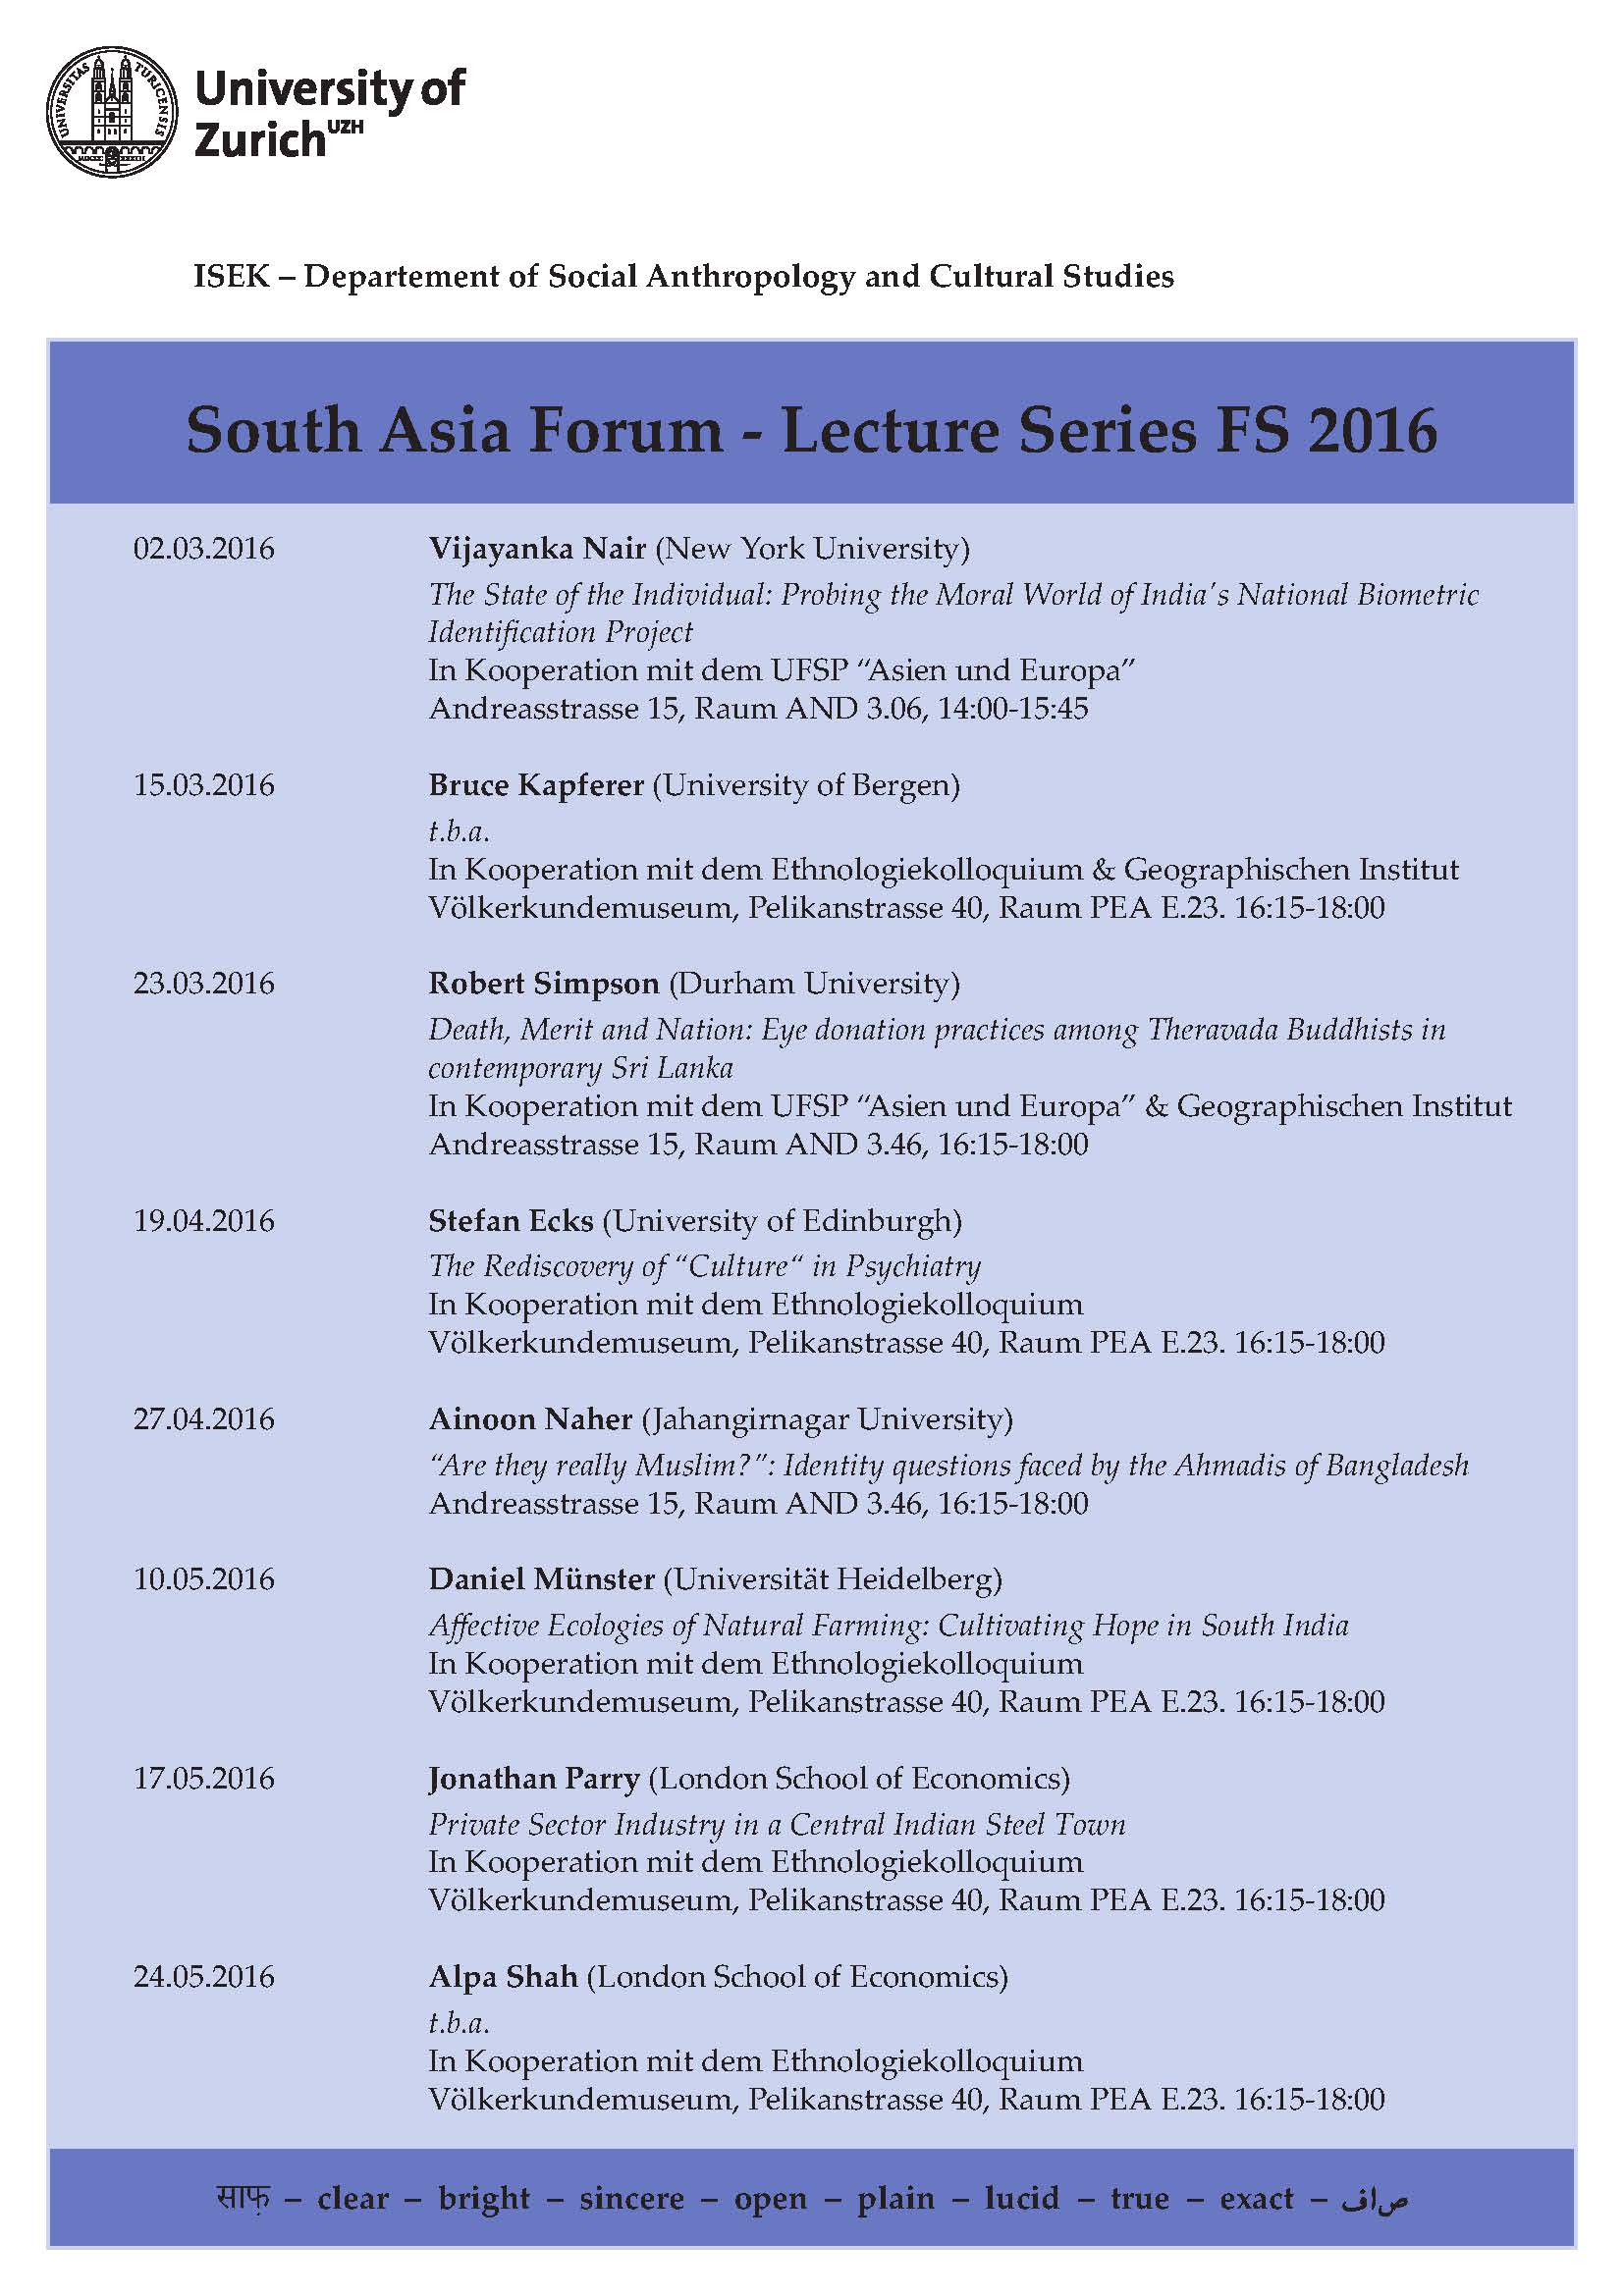 SAF Lecture Series FS16